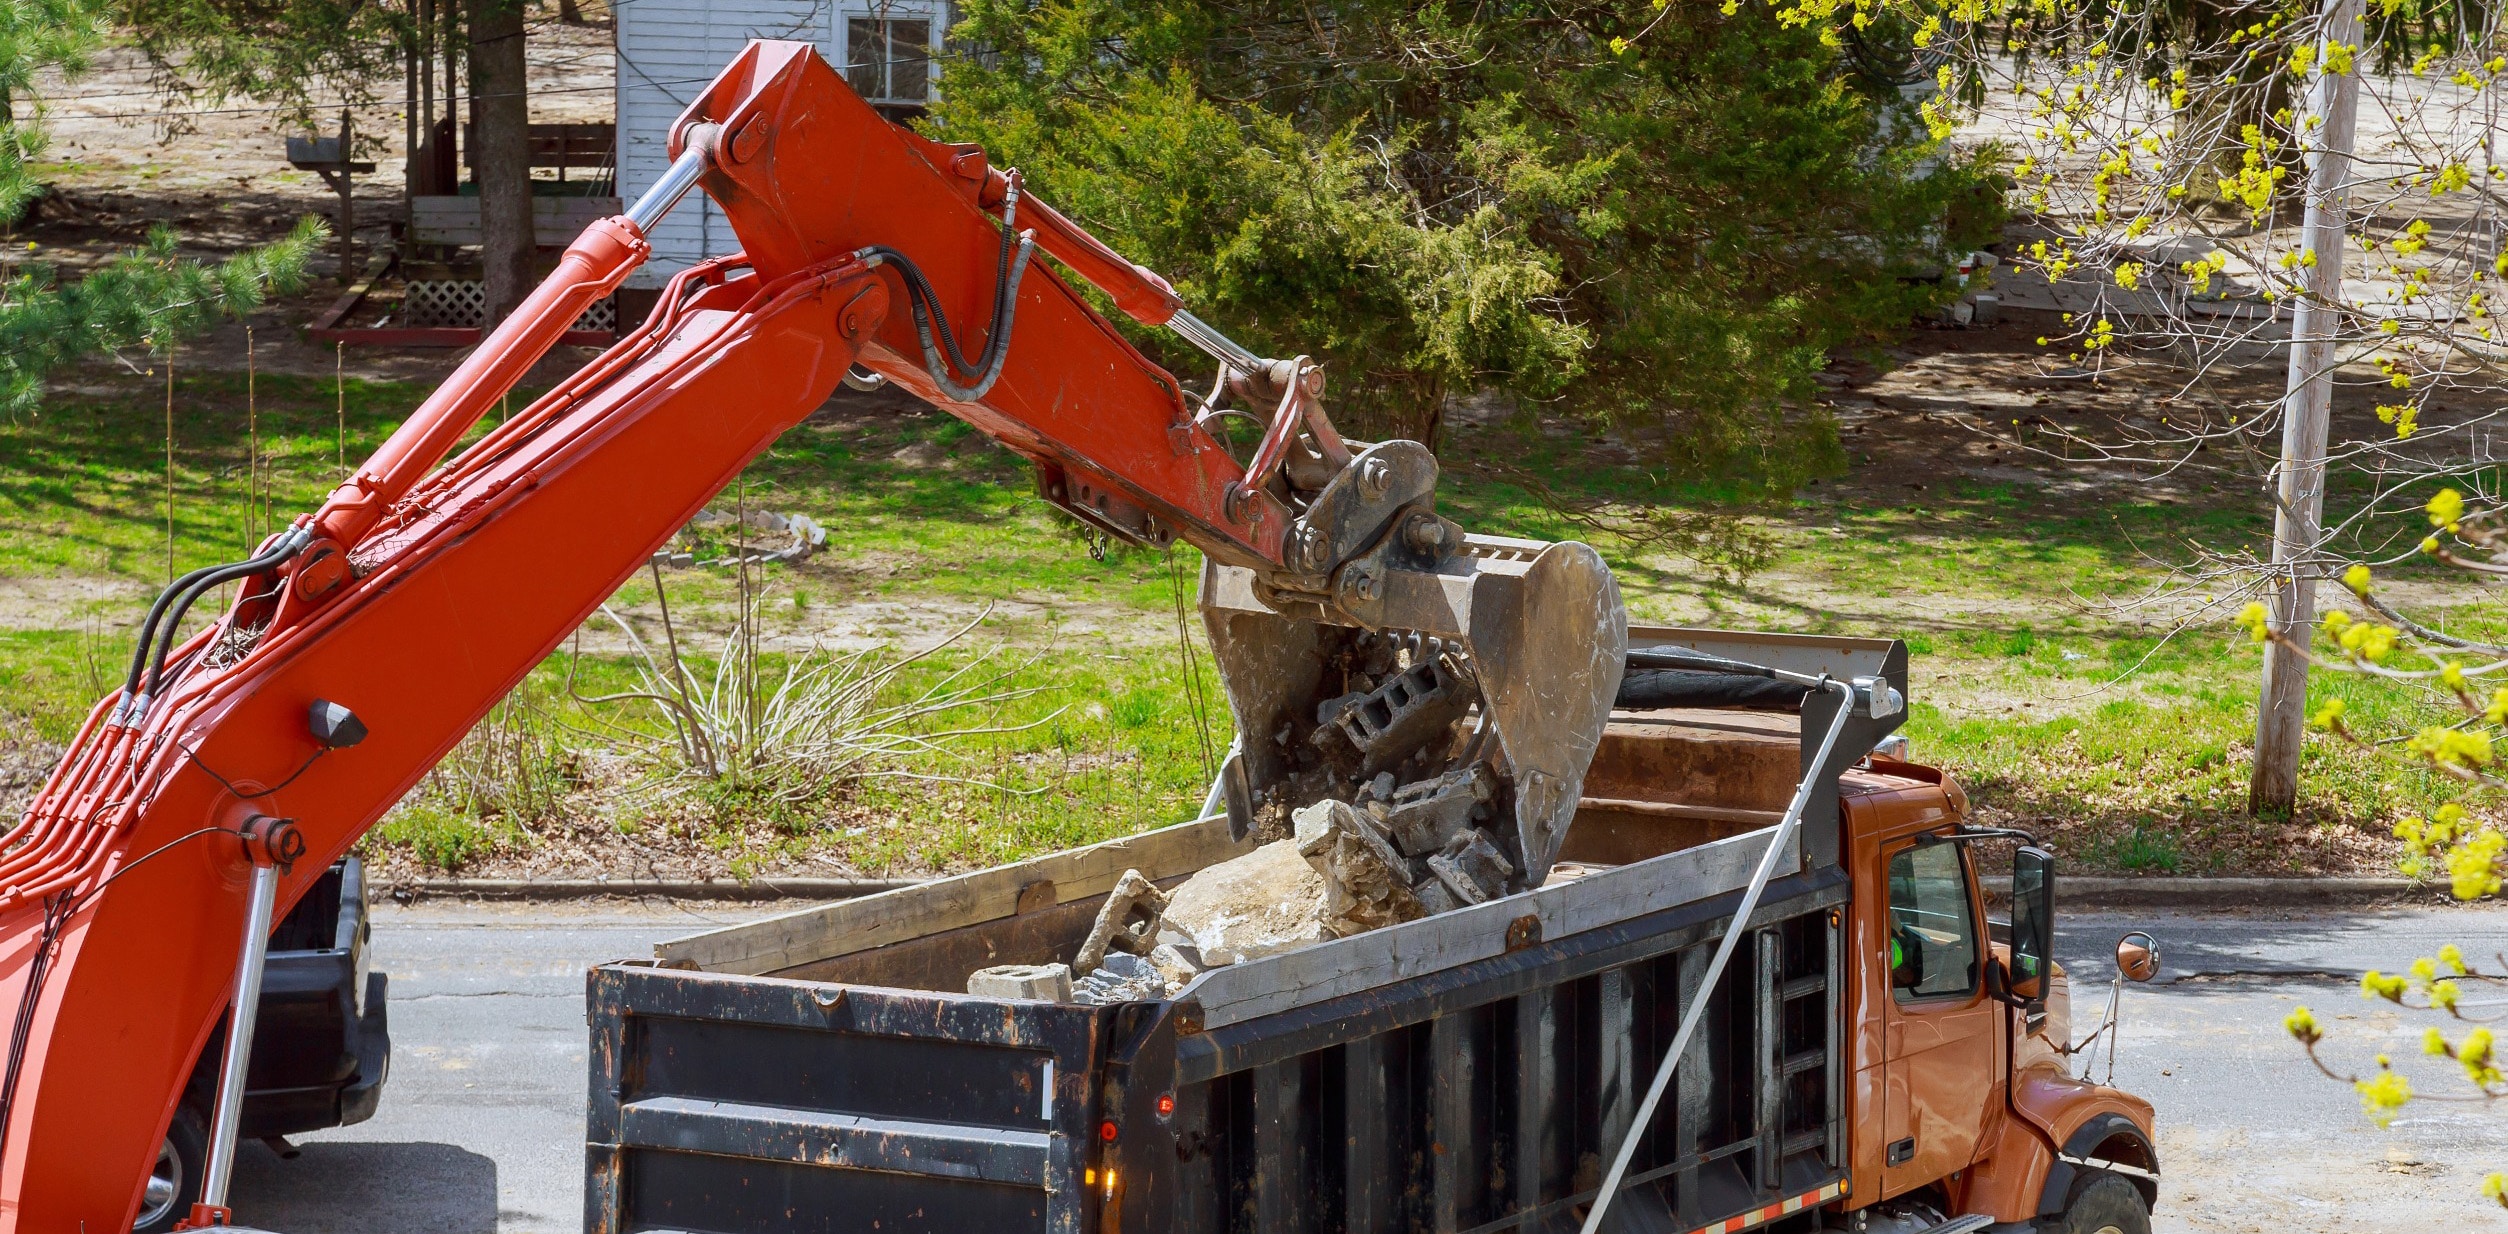 Excavator loading demolition debris into a dump truck